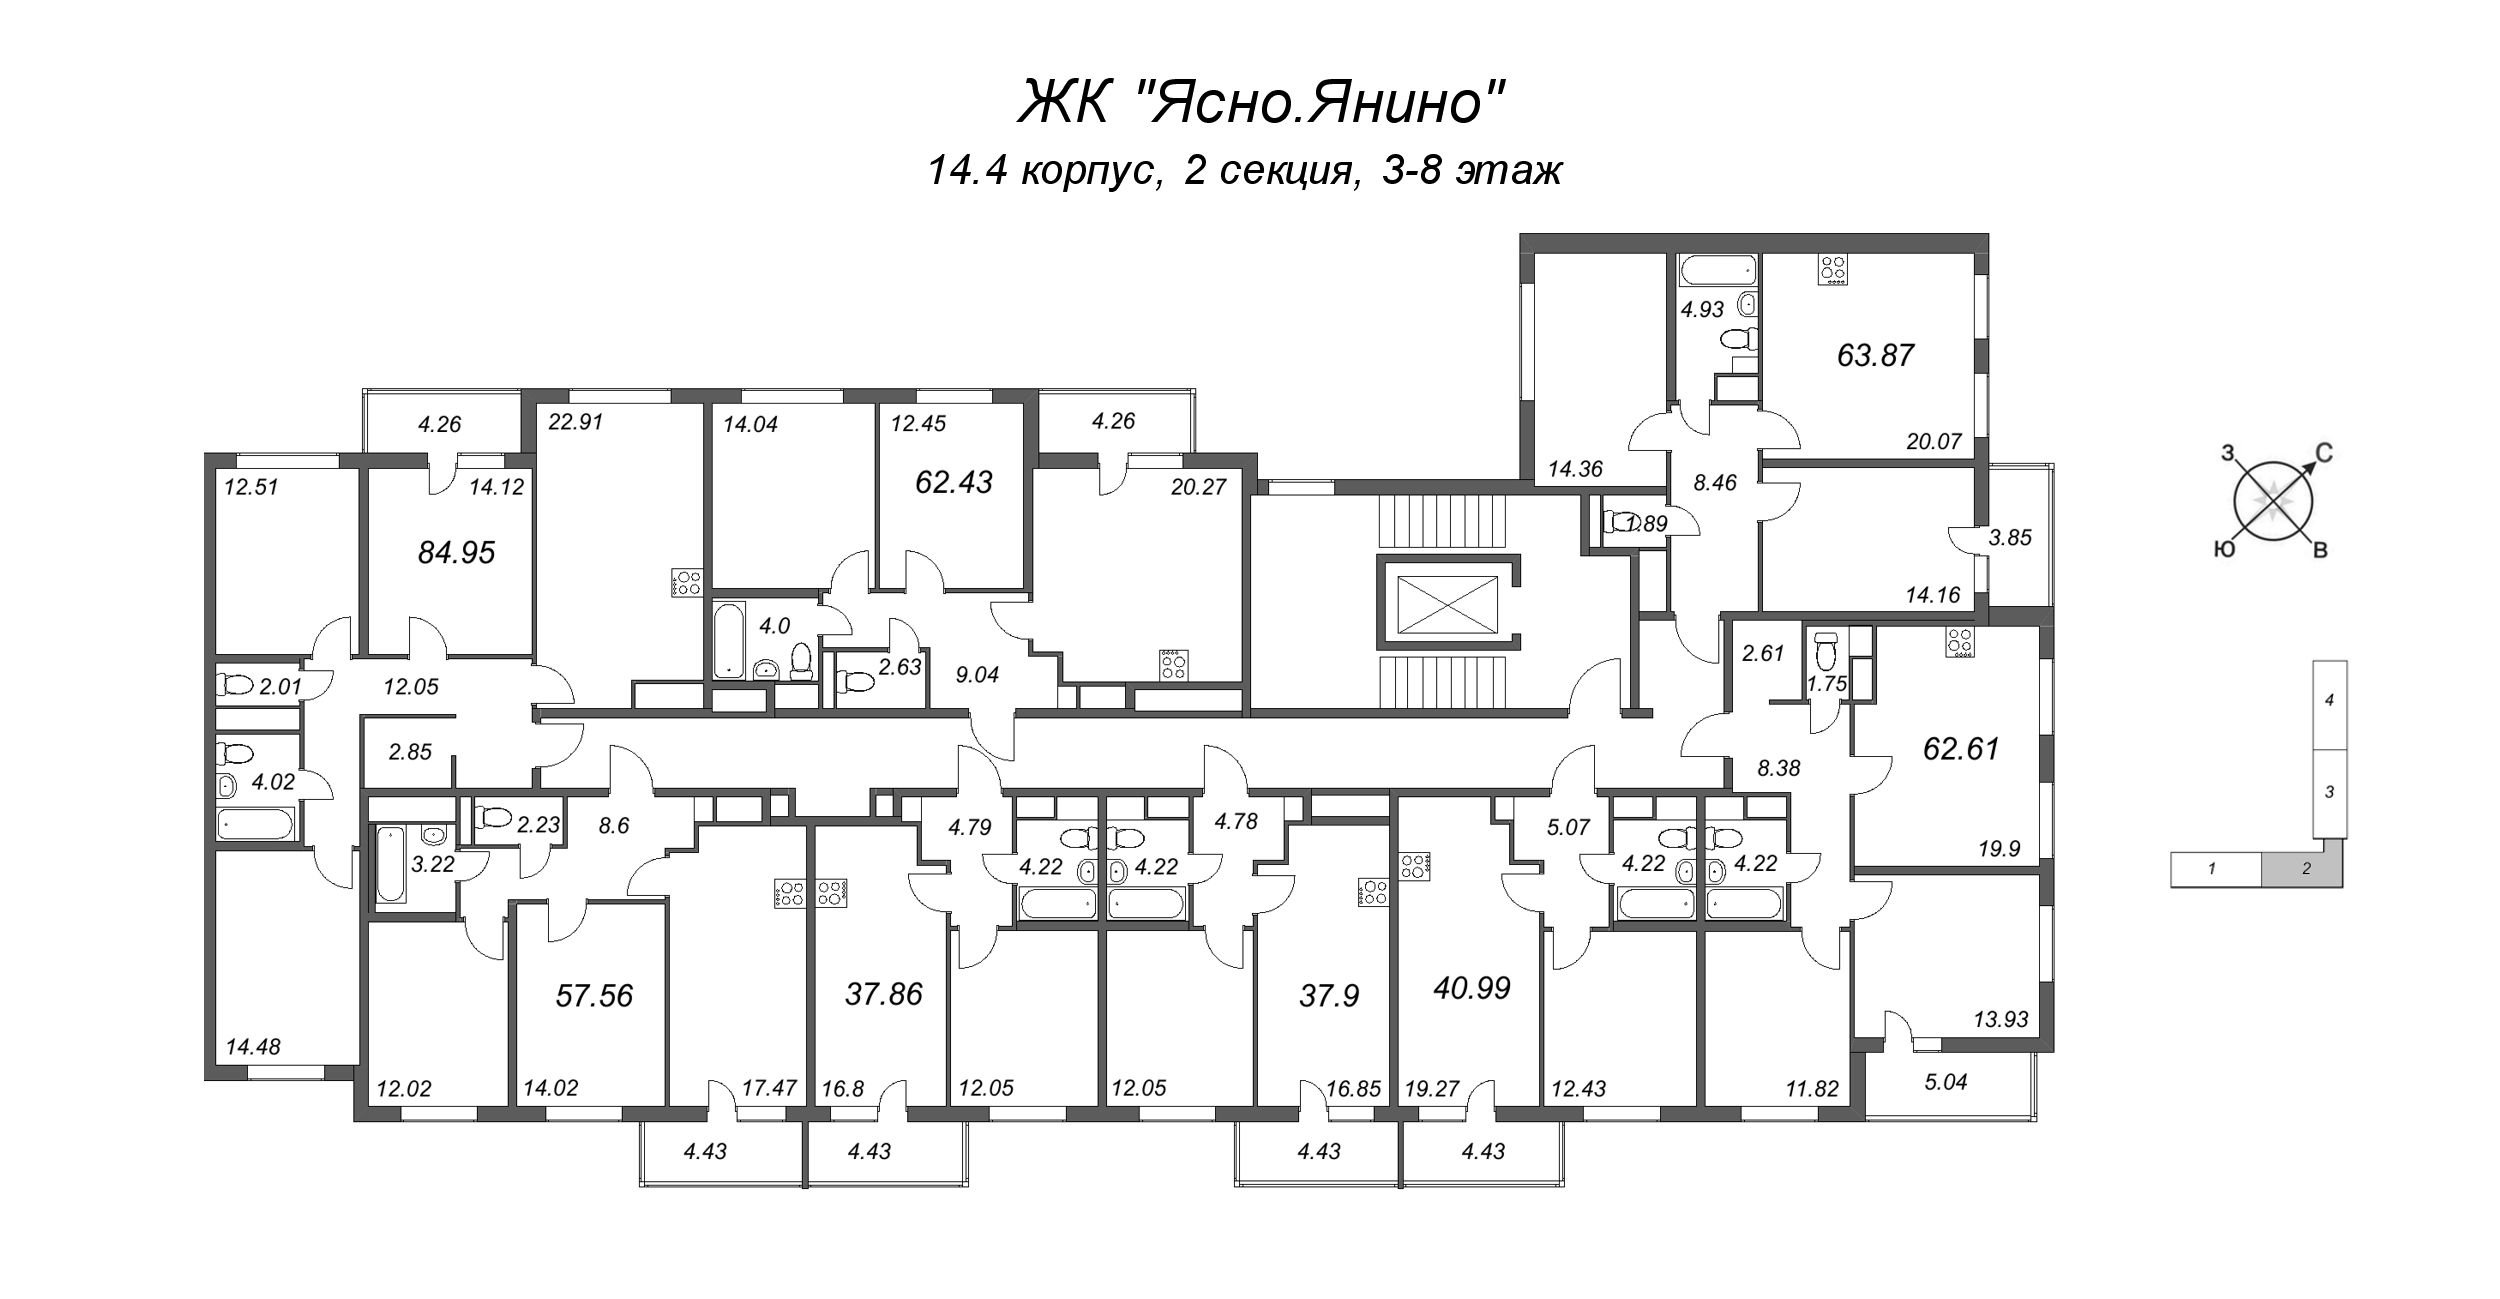 2-комнатная (Евро) квартира, 37.86 м² в ЖК "Ясно.Янино" - планировка этажа